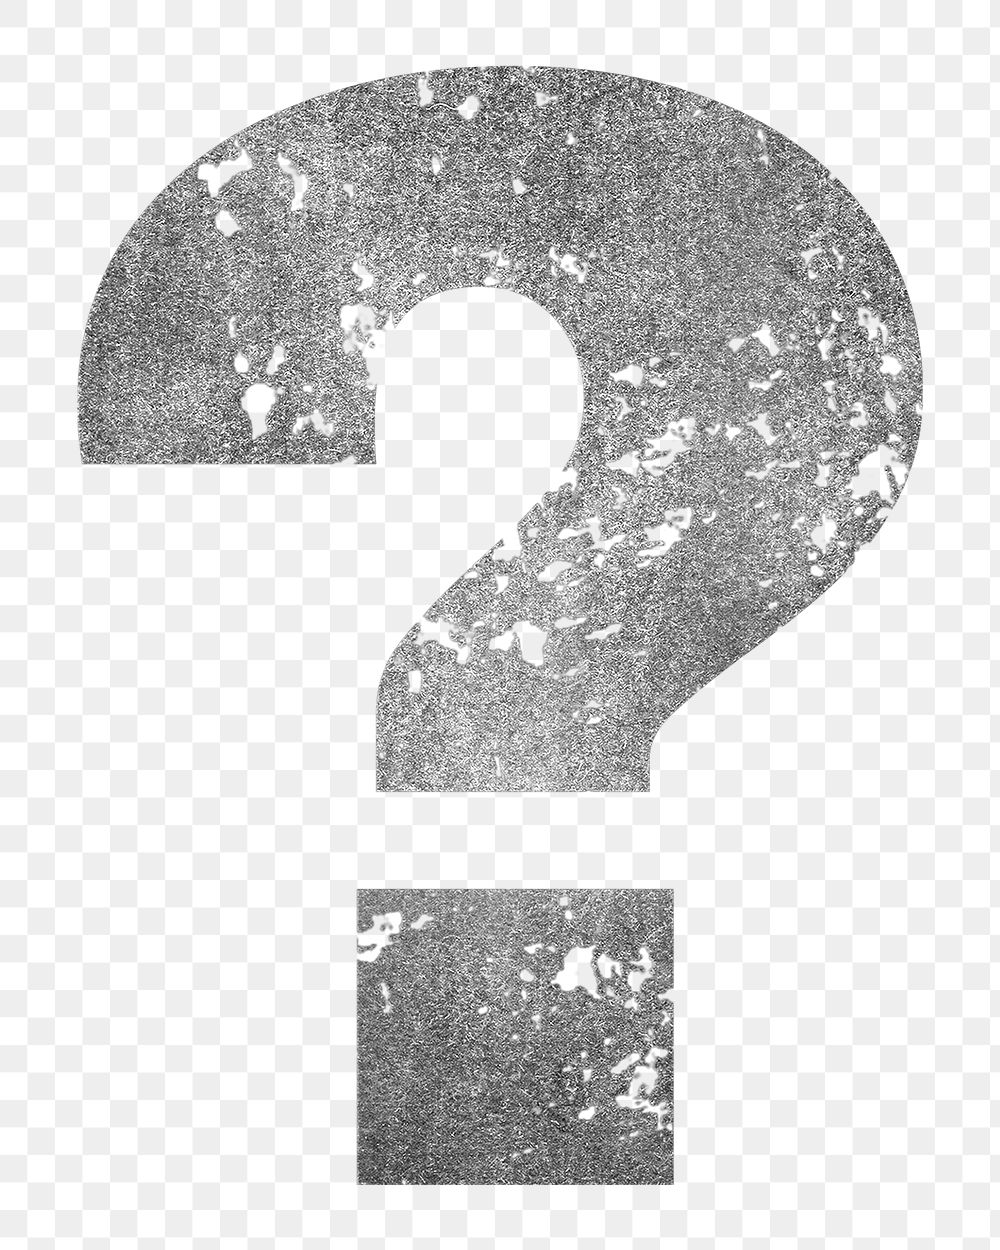 Question mark sign png grunge gray symbol, transparent background